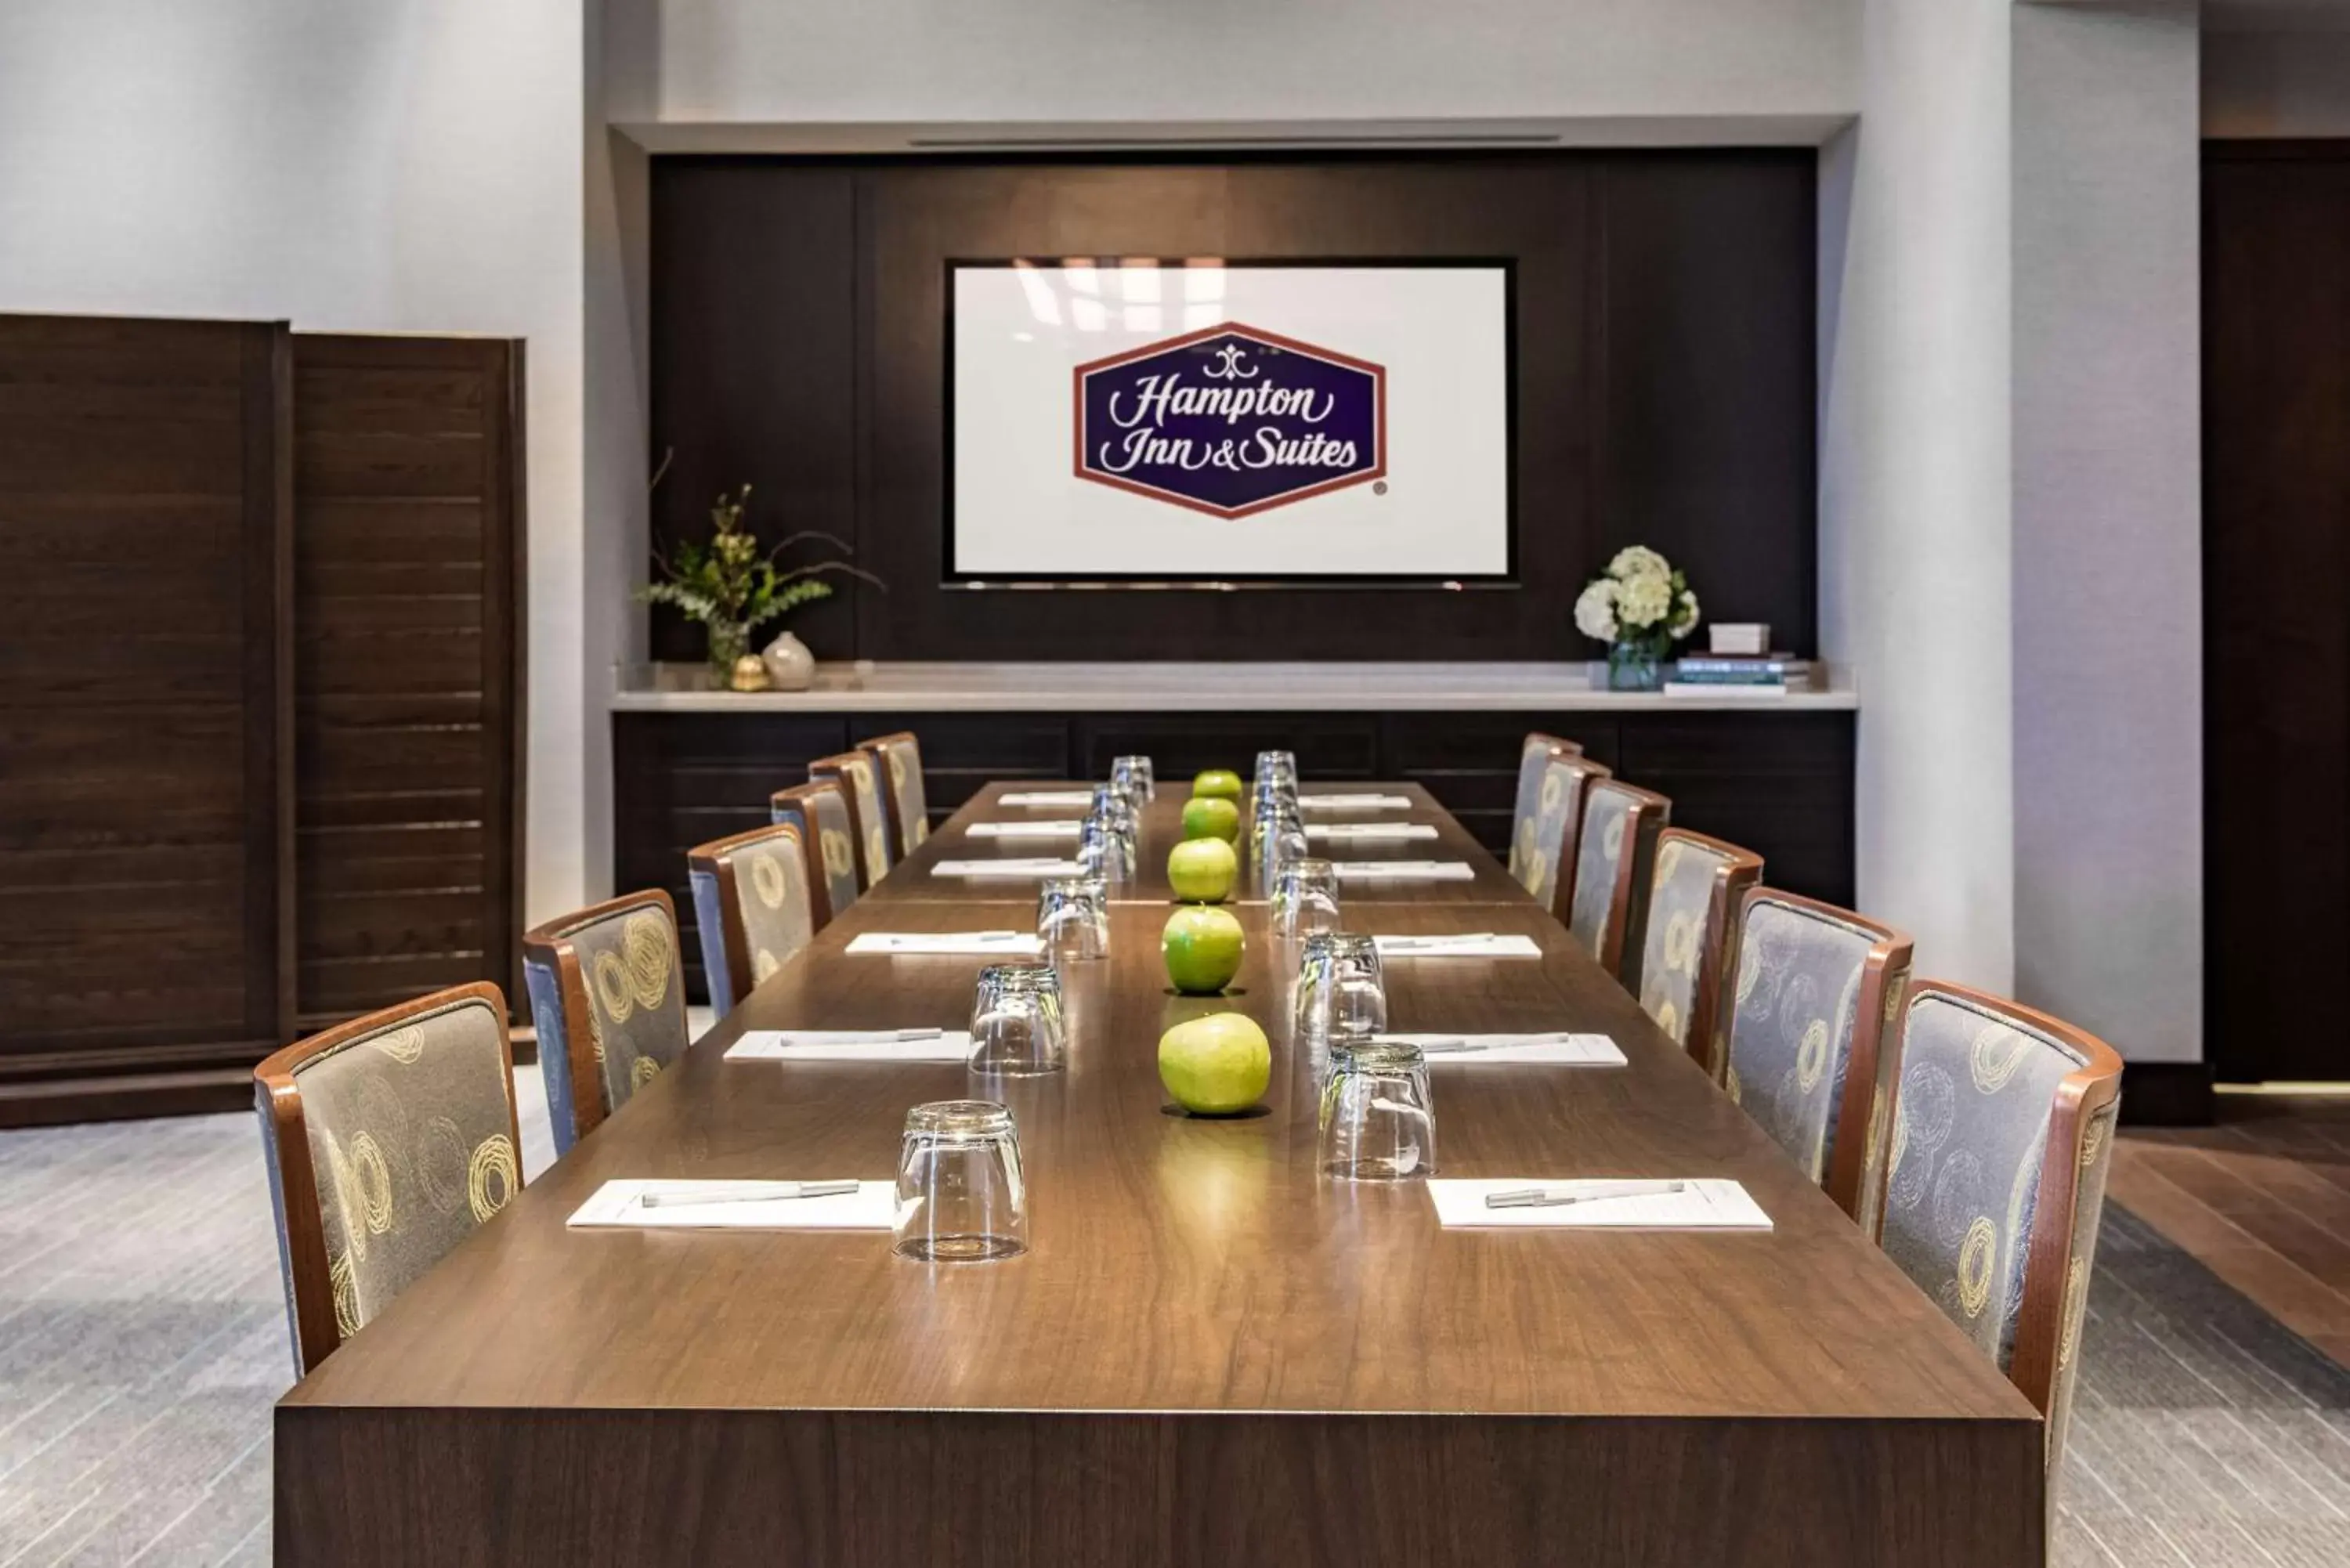 Meeting/conference room in Hampton Inn & Suites Washington, D.C. - Navy Yard